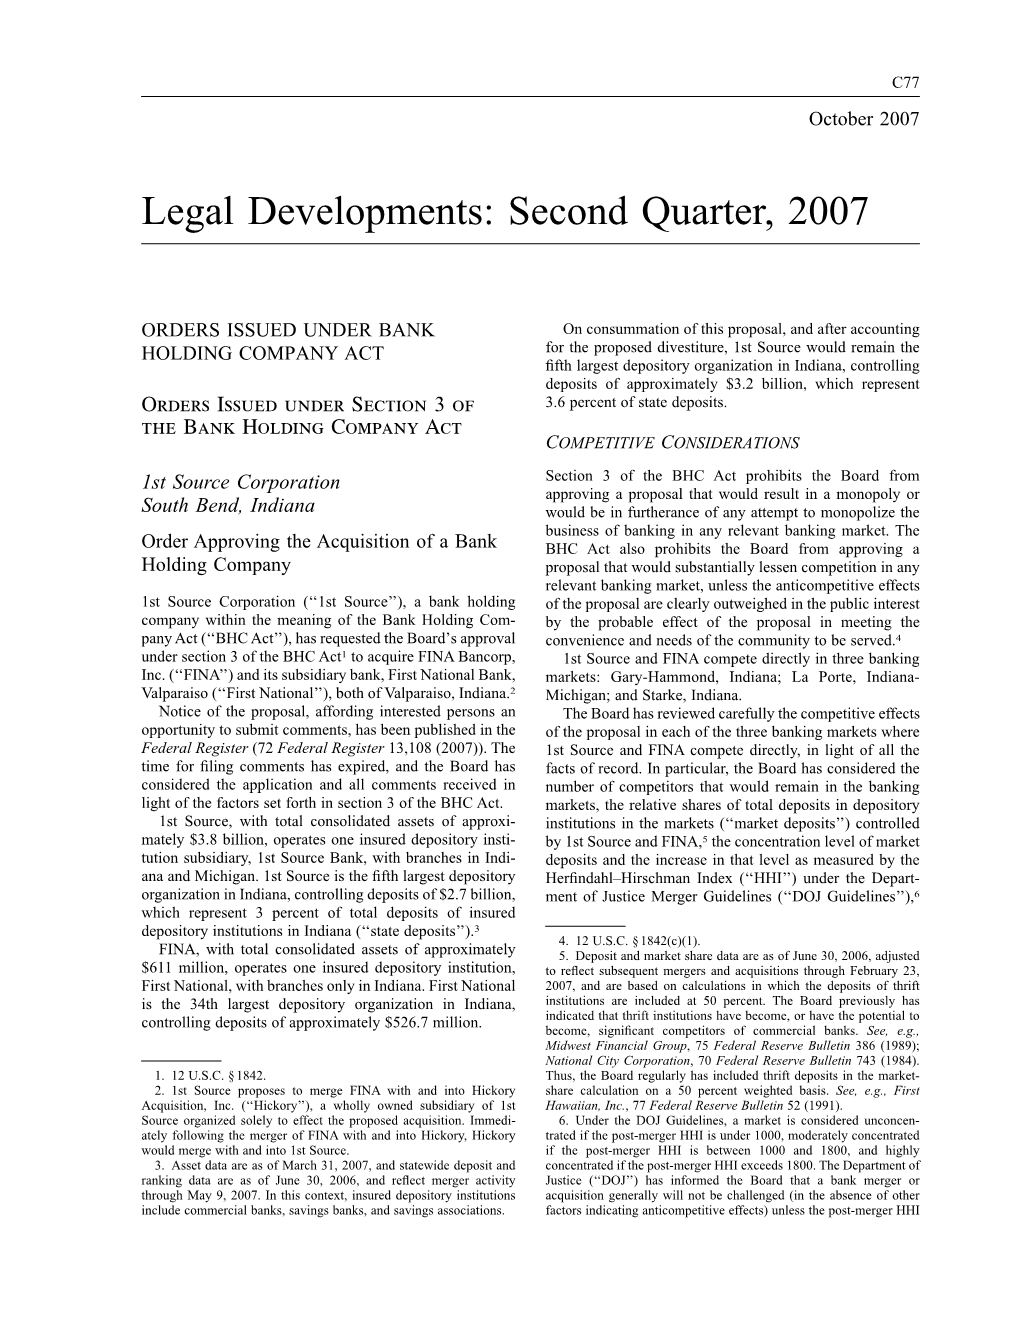 Legal Developments: Second Quarter, 2007